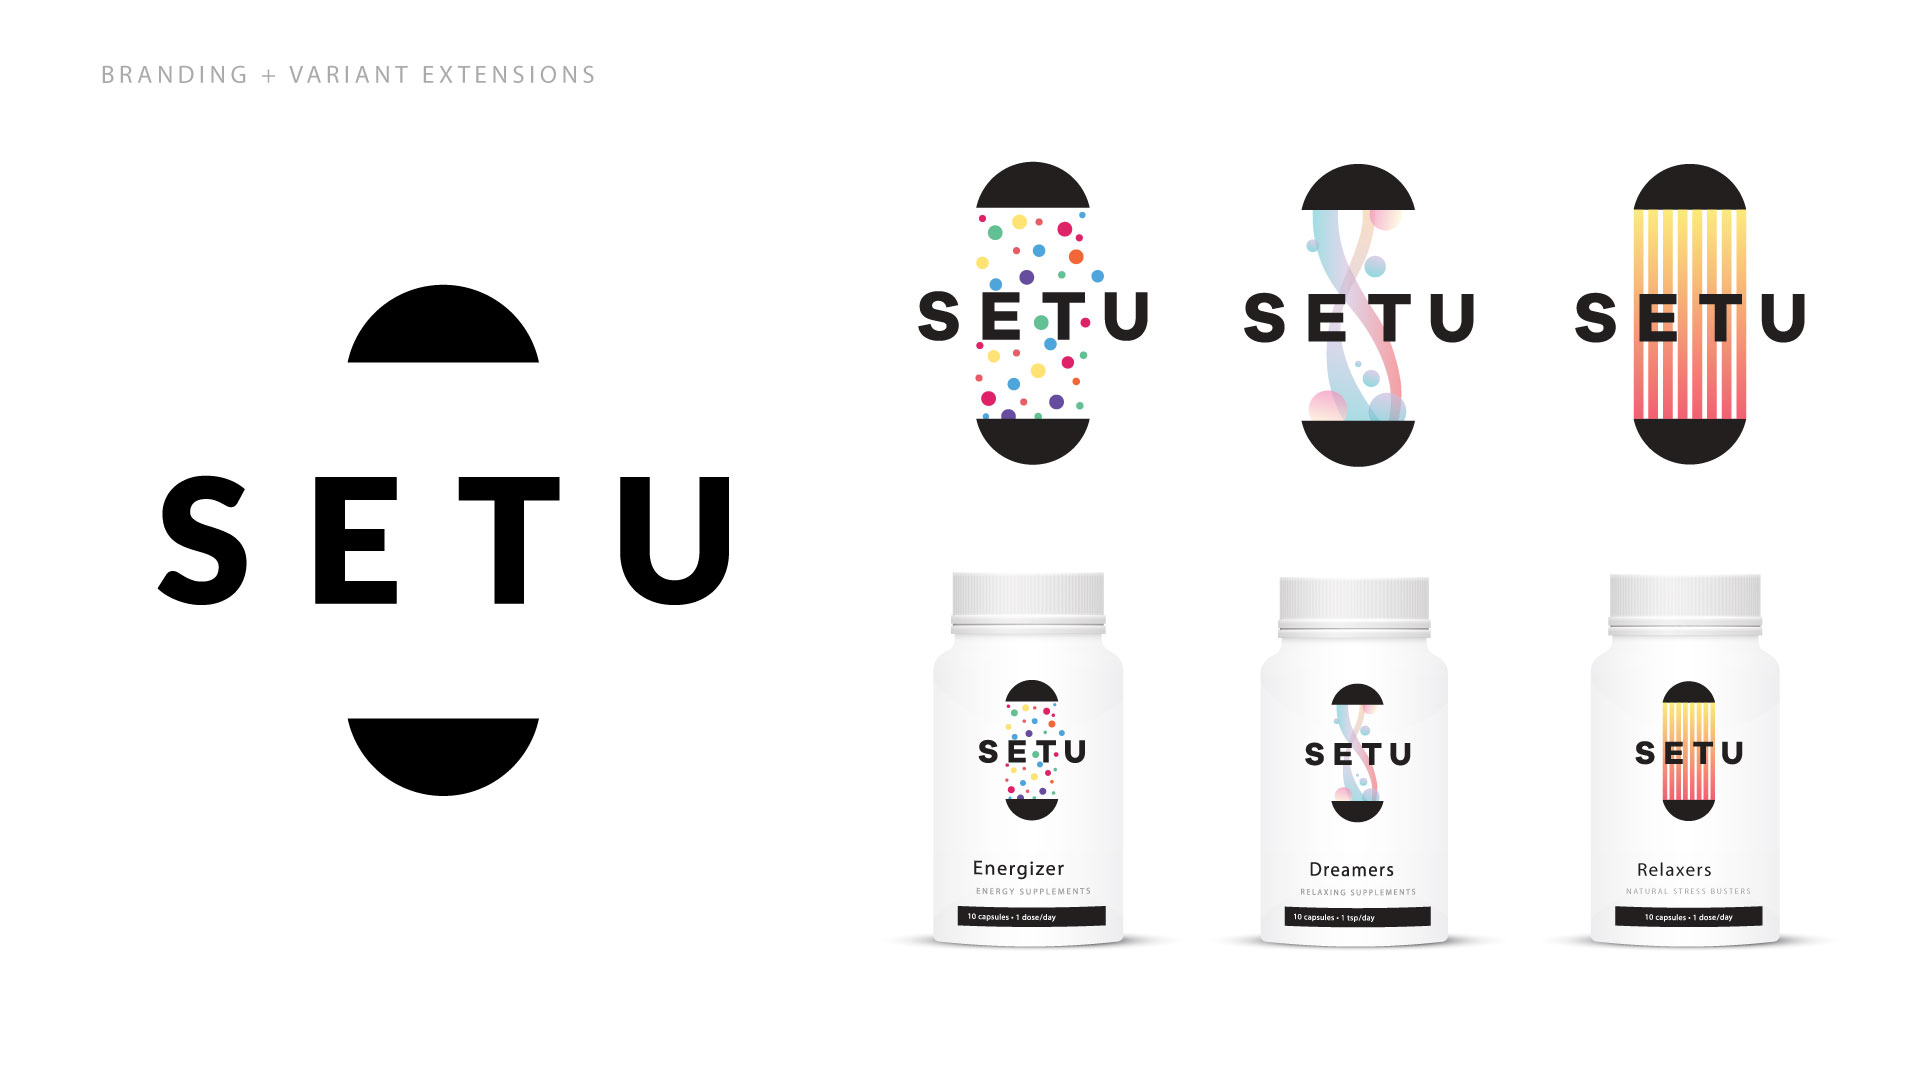 Pill like logo design and bottles with the same logo on them reading SETU.